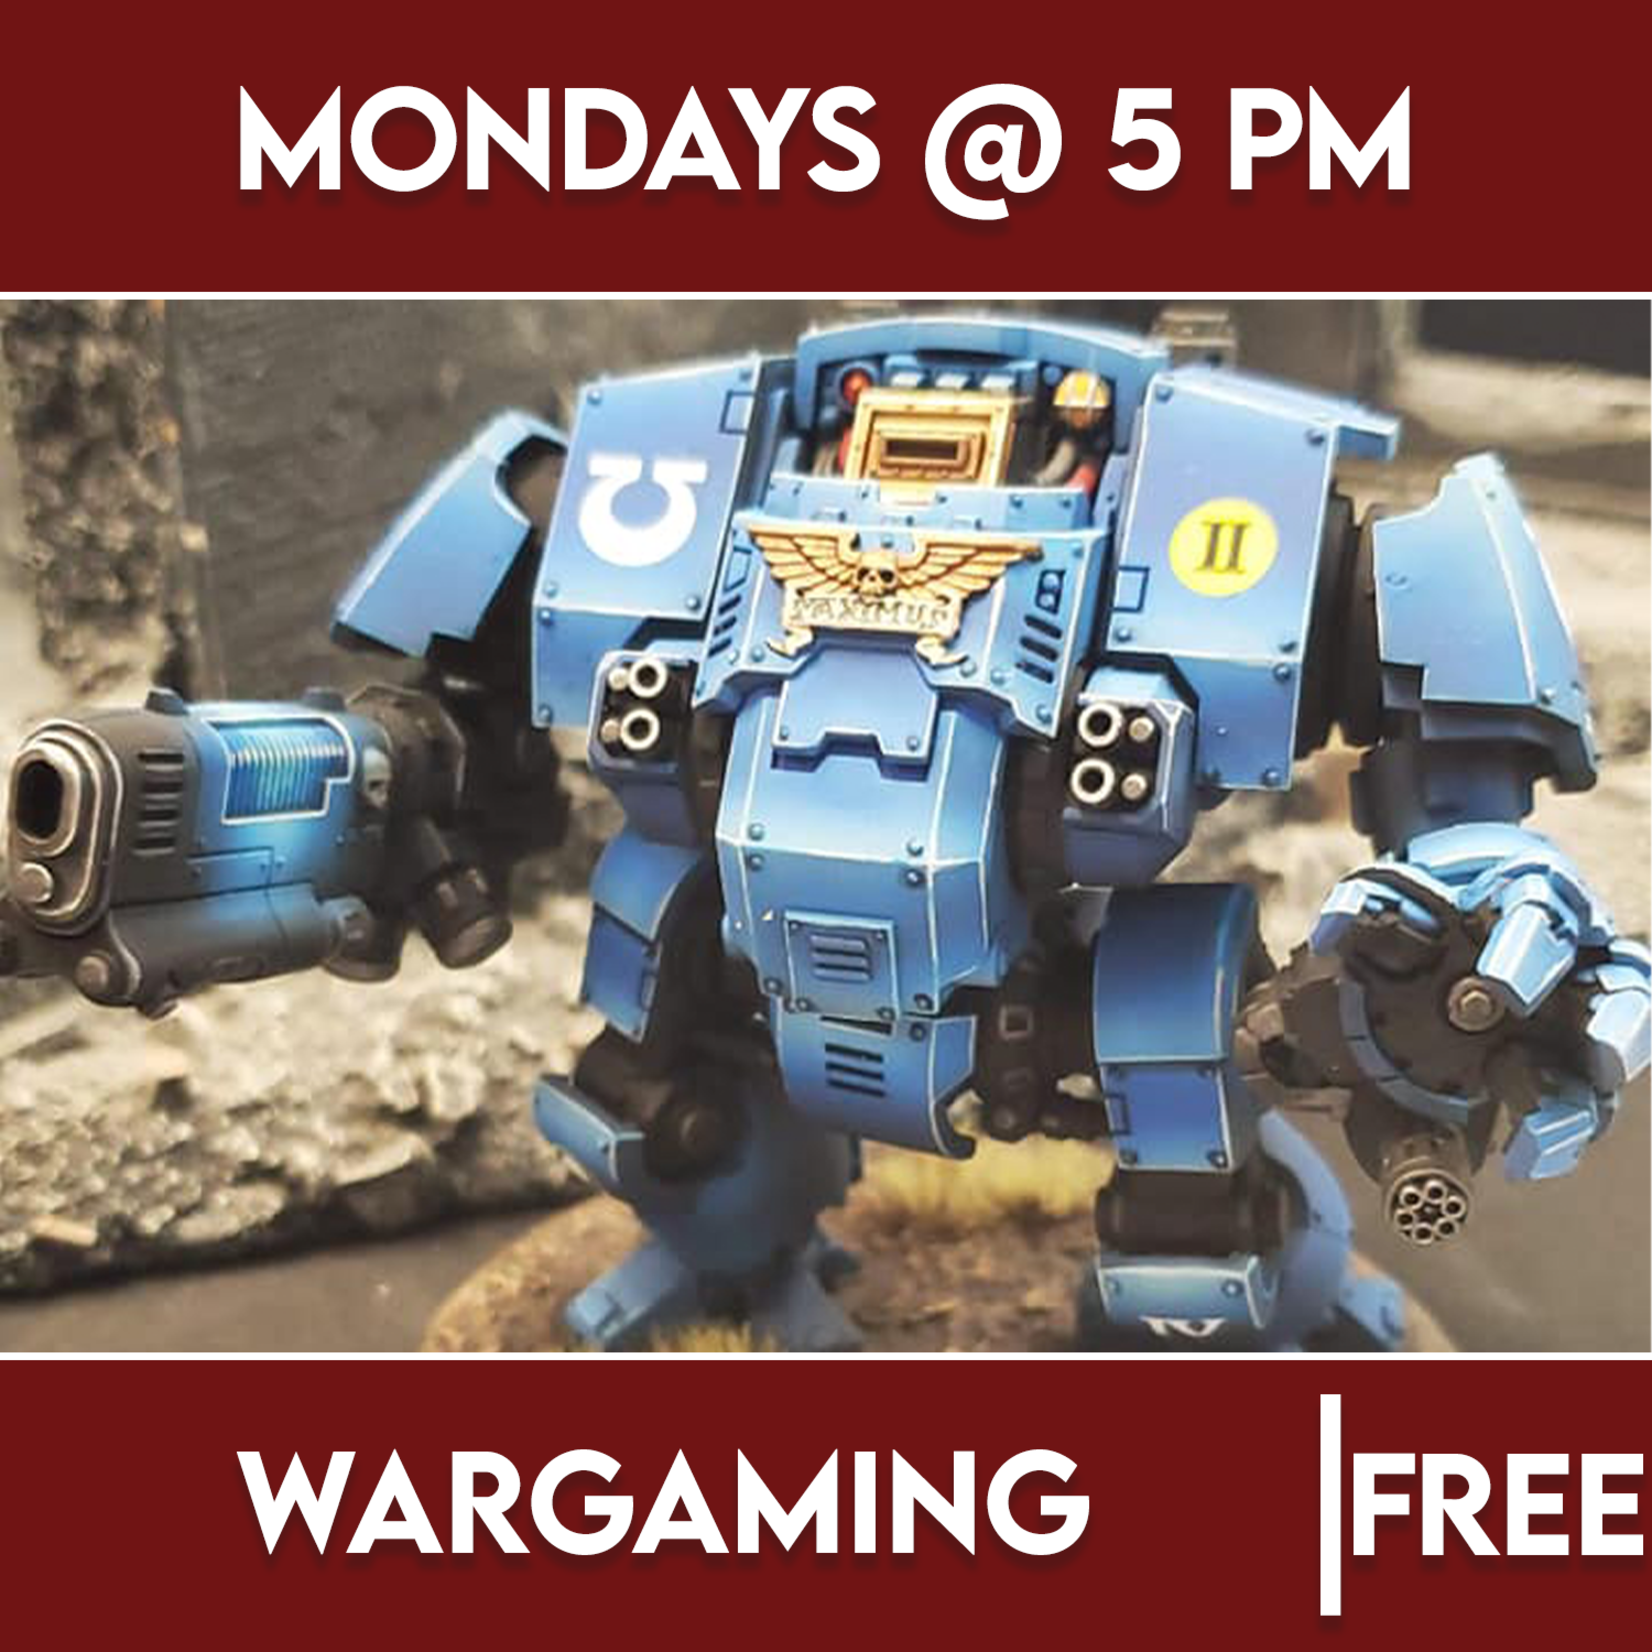 Warhammer Events 05/06 Monday @ 5 PM - Miniature Wargaming